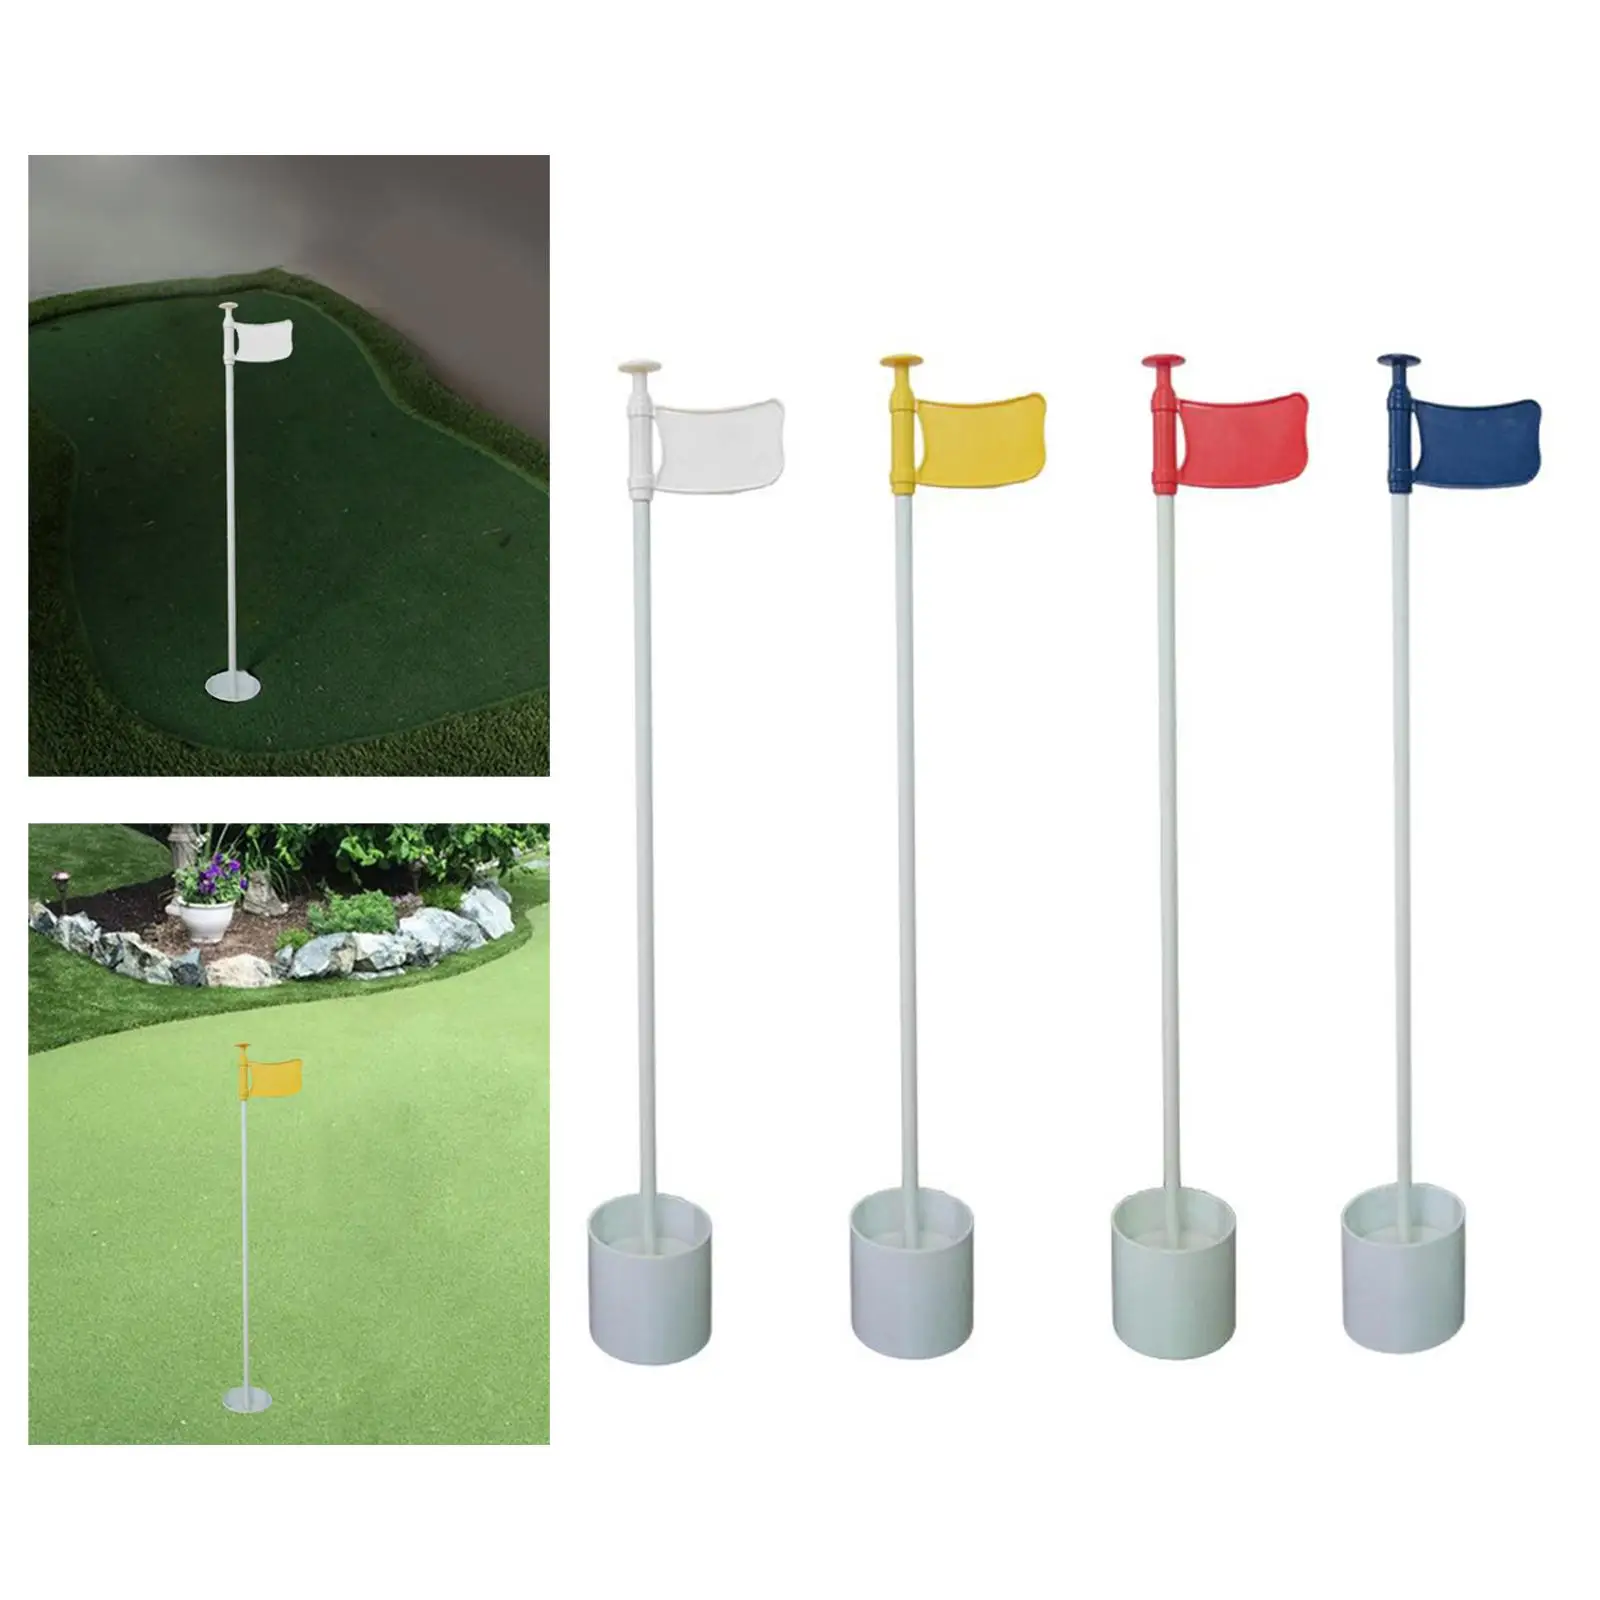 Golf Flag Hole Cup Set Practice Putting Golf Putting Green Flag and Hole Cup Golf Flagpoles for Men Women Kids Yard Lawn